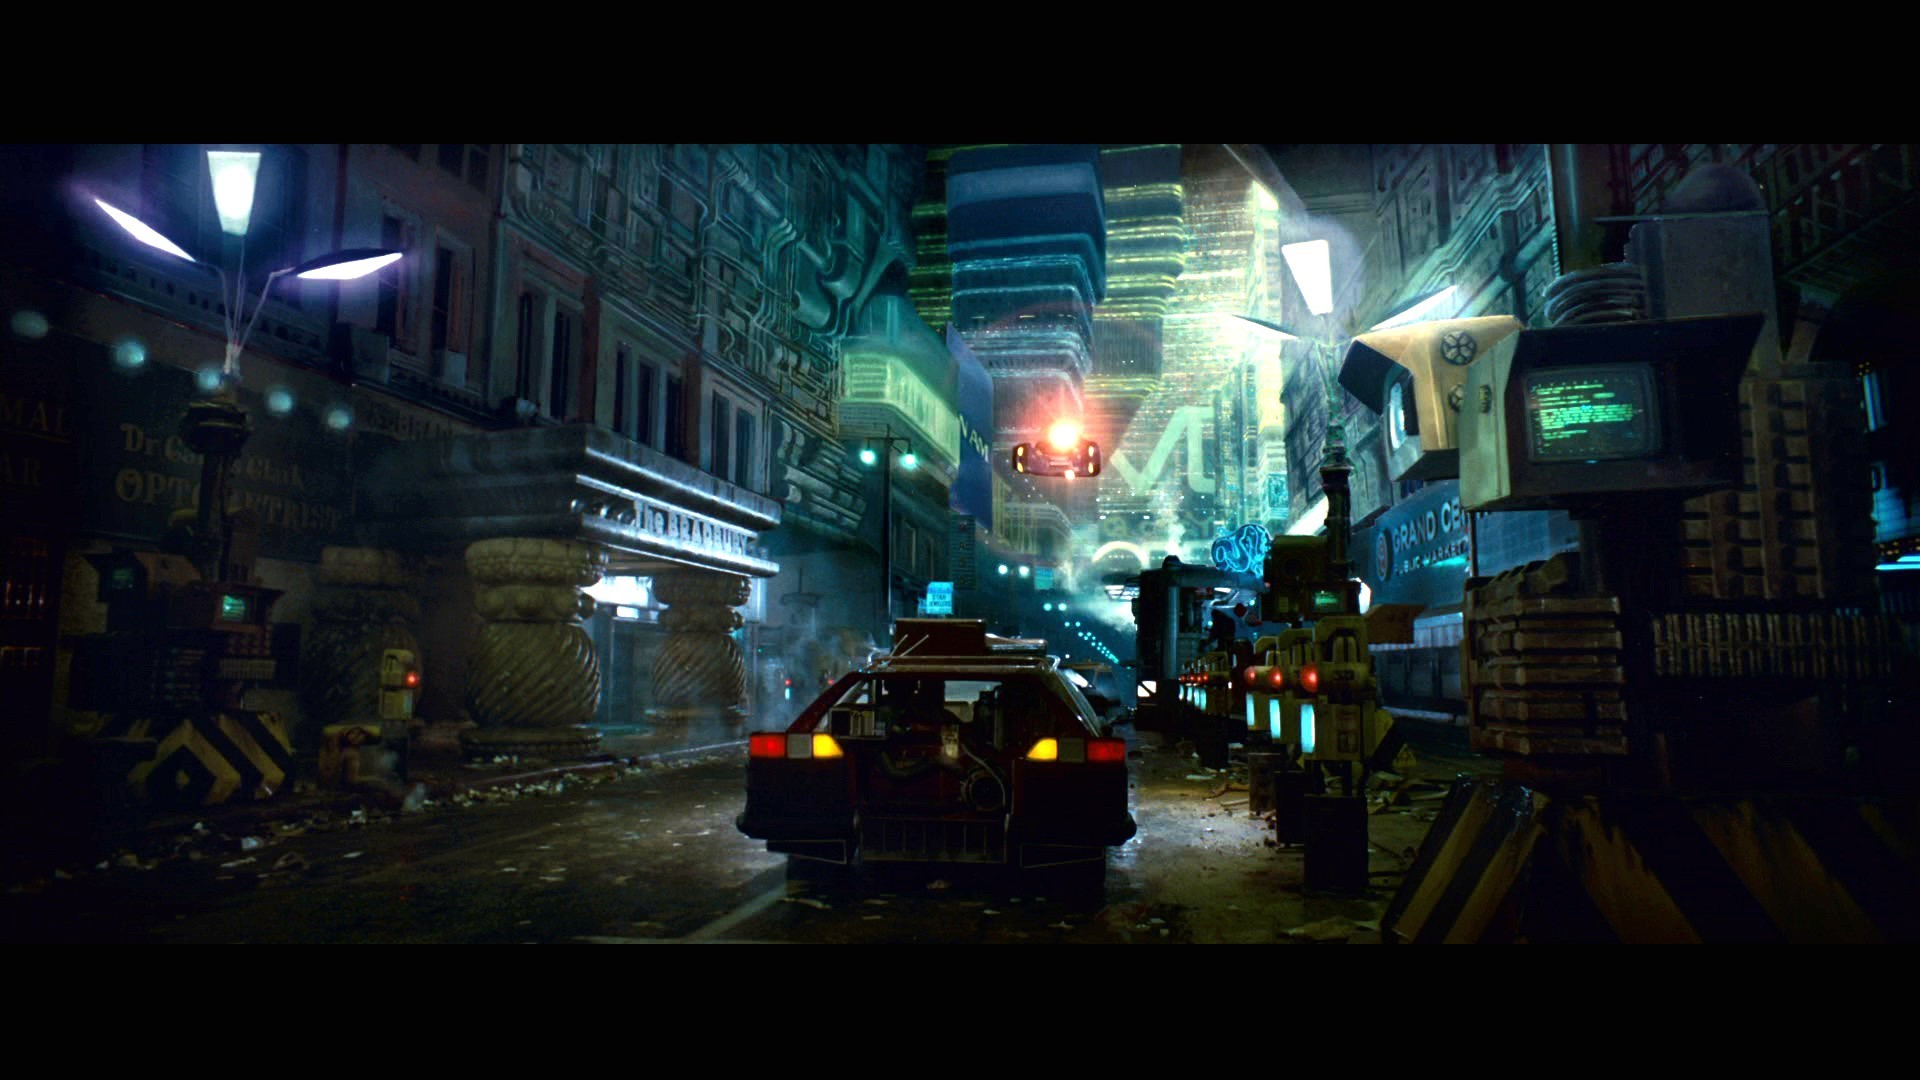 Blade Runner 2049 Wallpapers  Top 20 Best Blade Runner 2049 Wallpapers   HQ 